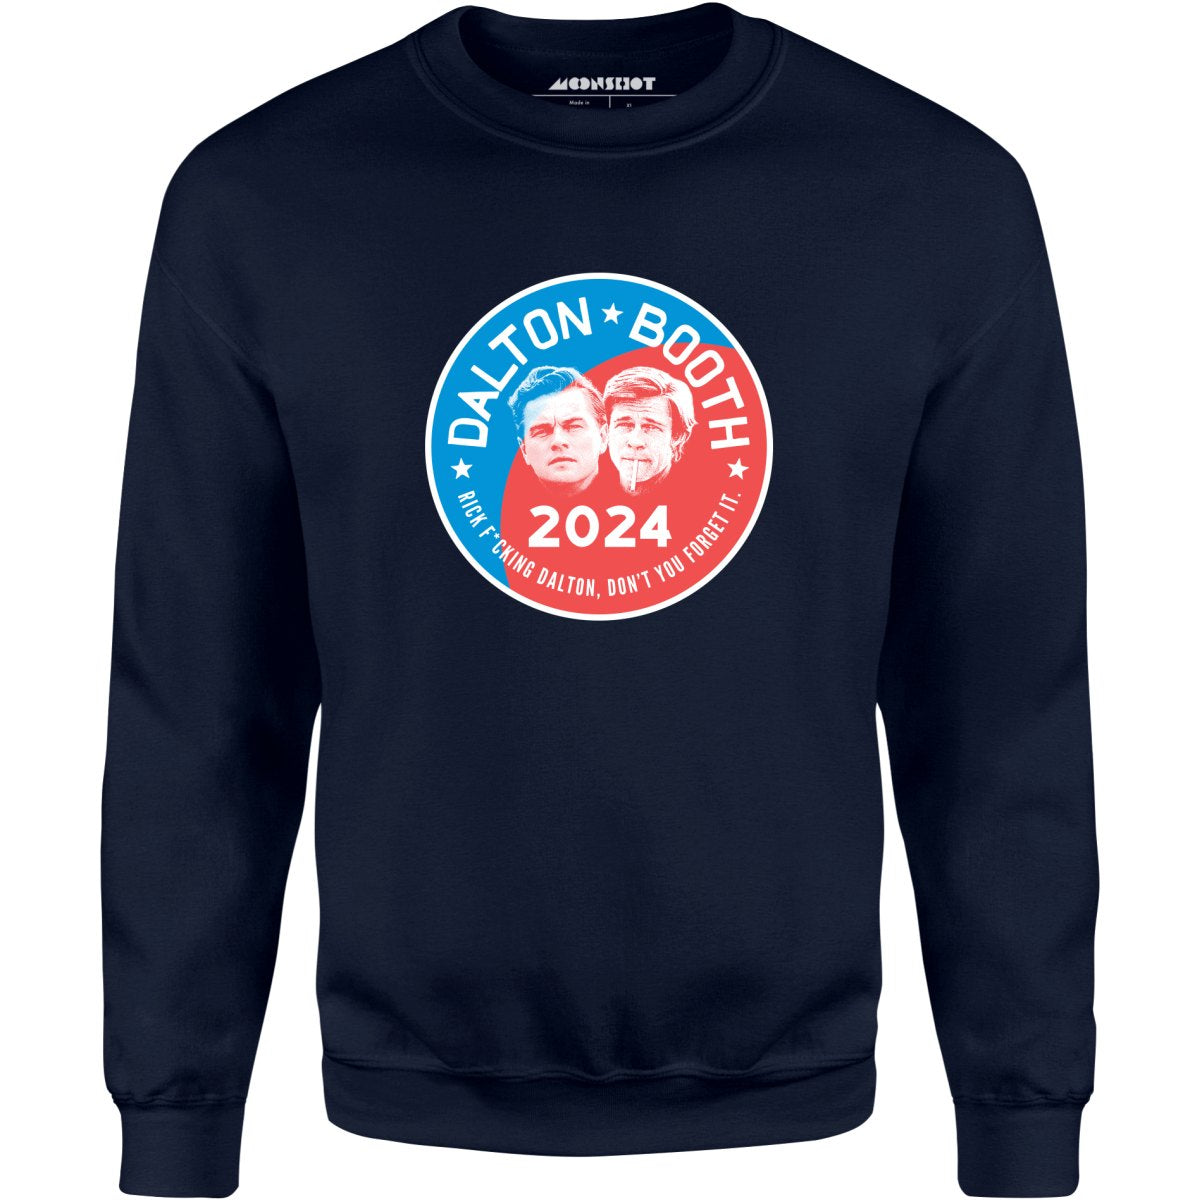 Dalton Booth 2024 - Unisex Sweatshirt